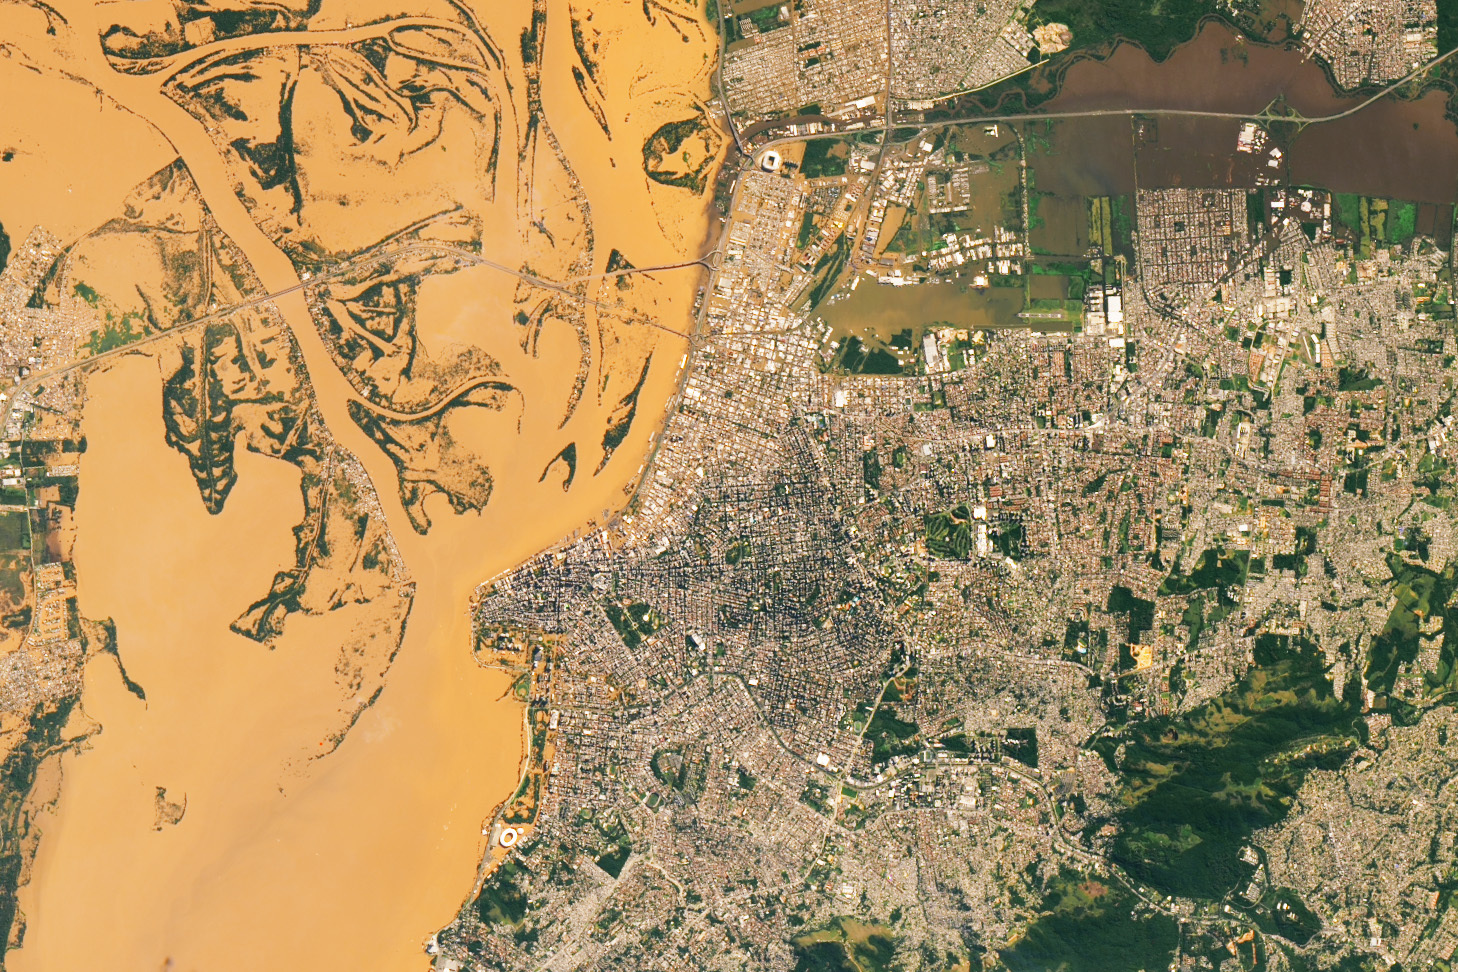 Floods Engulf Porto Alegre - related image preview